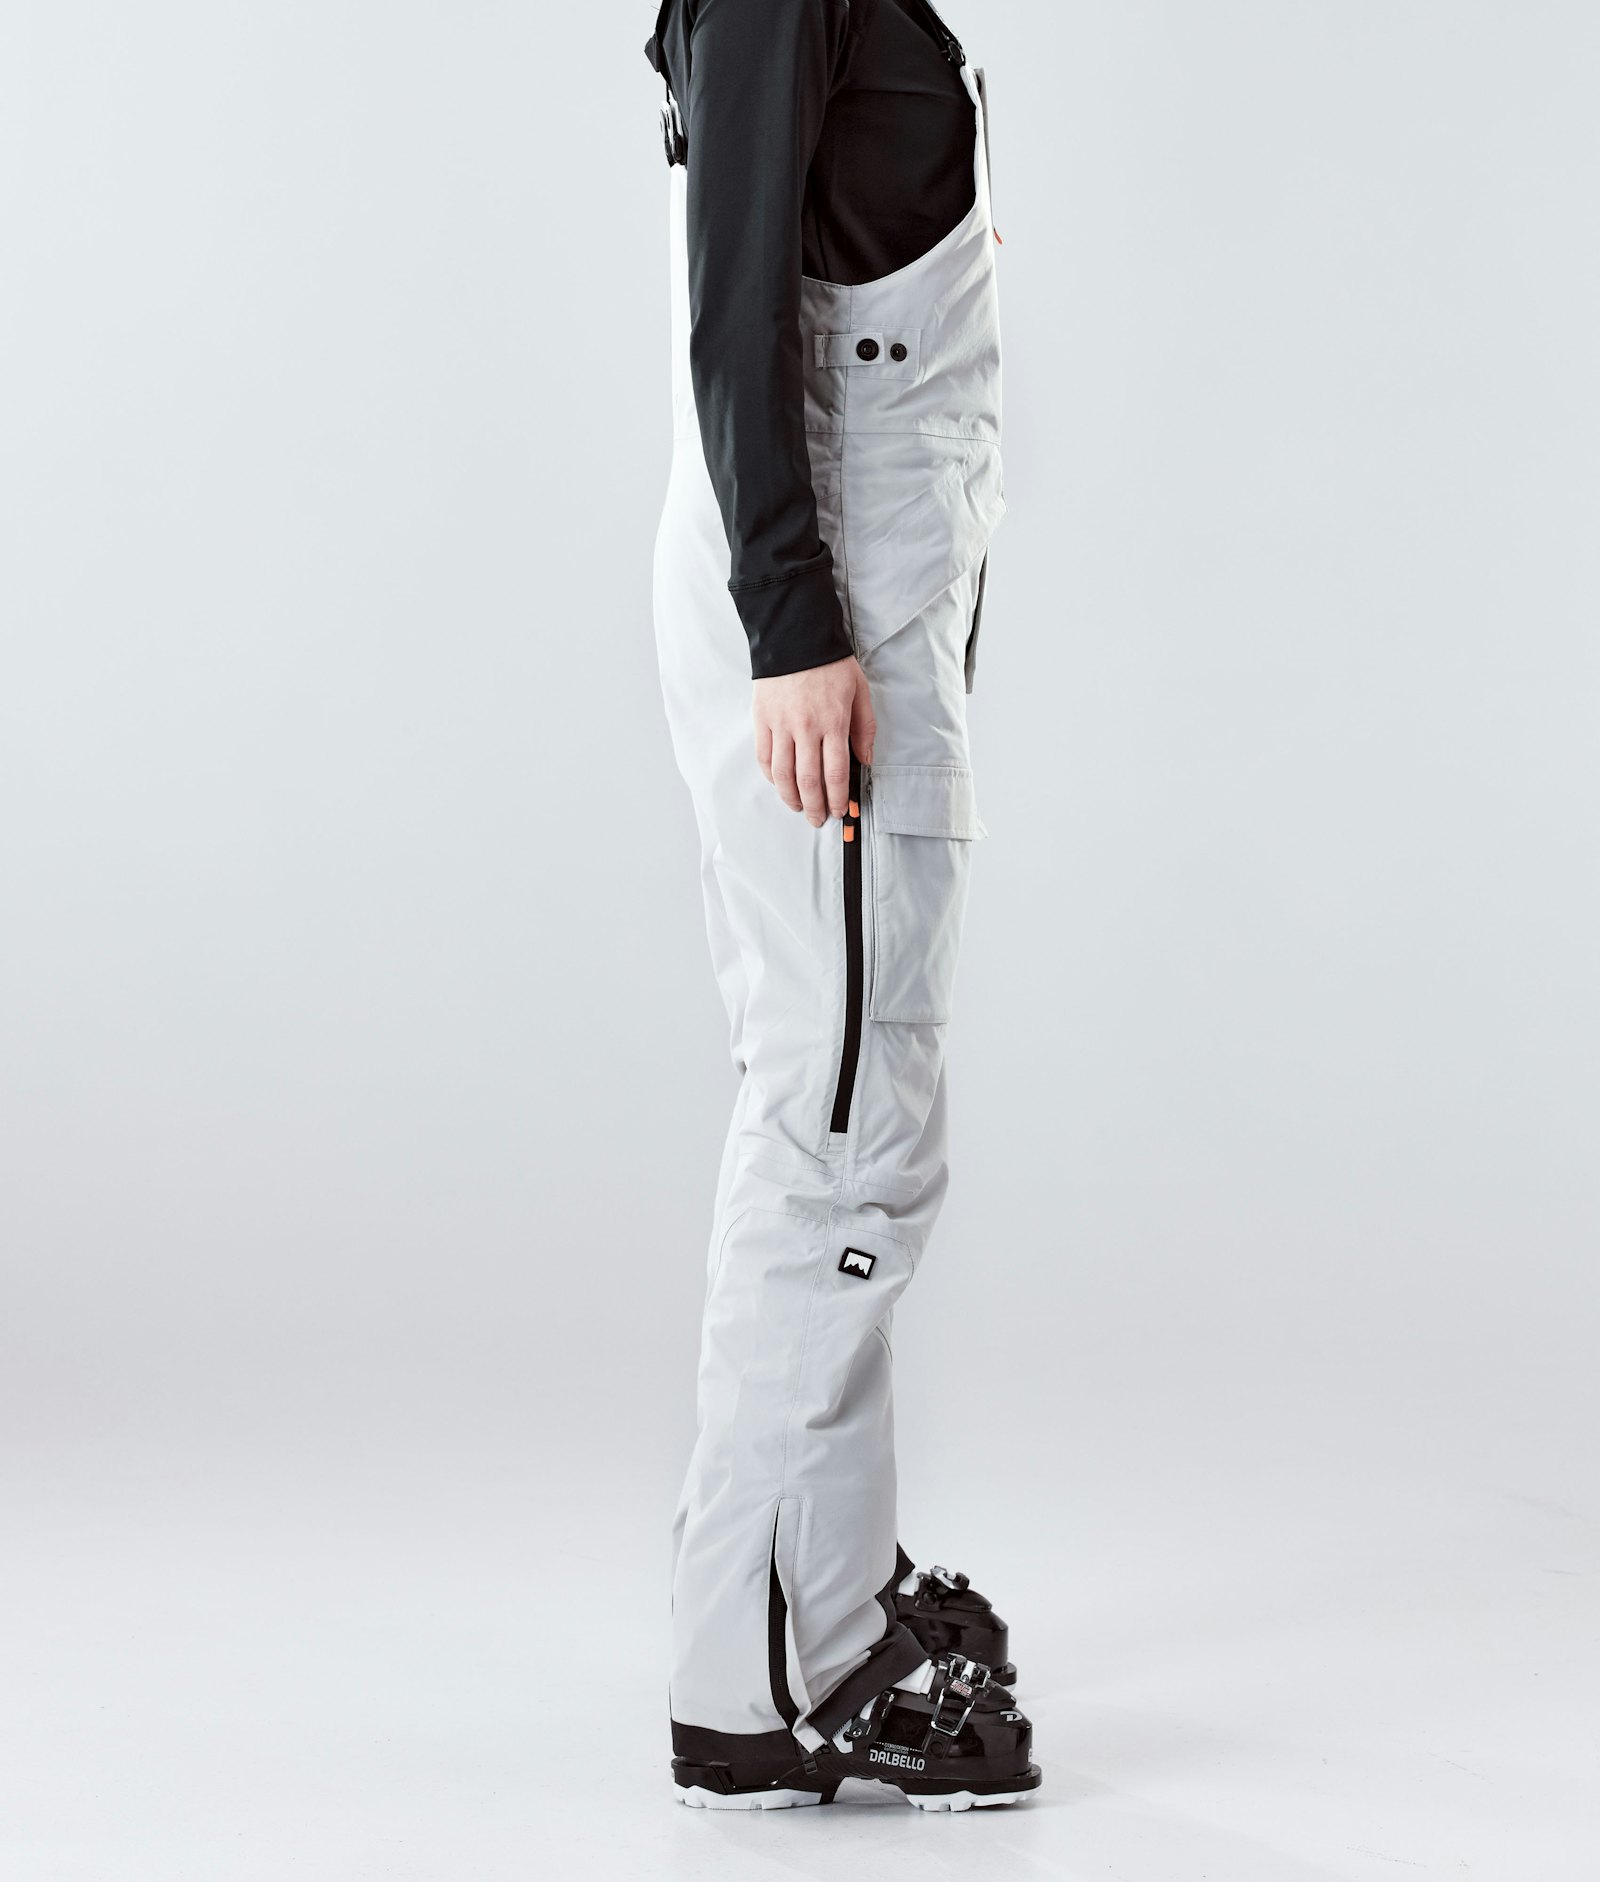 Fawk W 2020 Pantalon de Ski Femme Light Grey